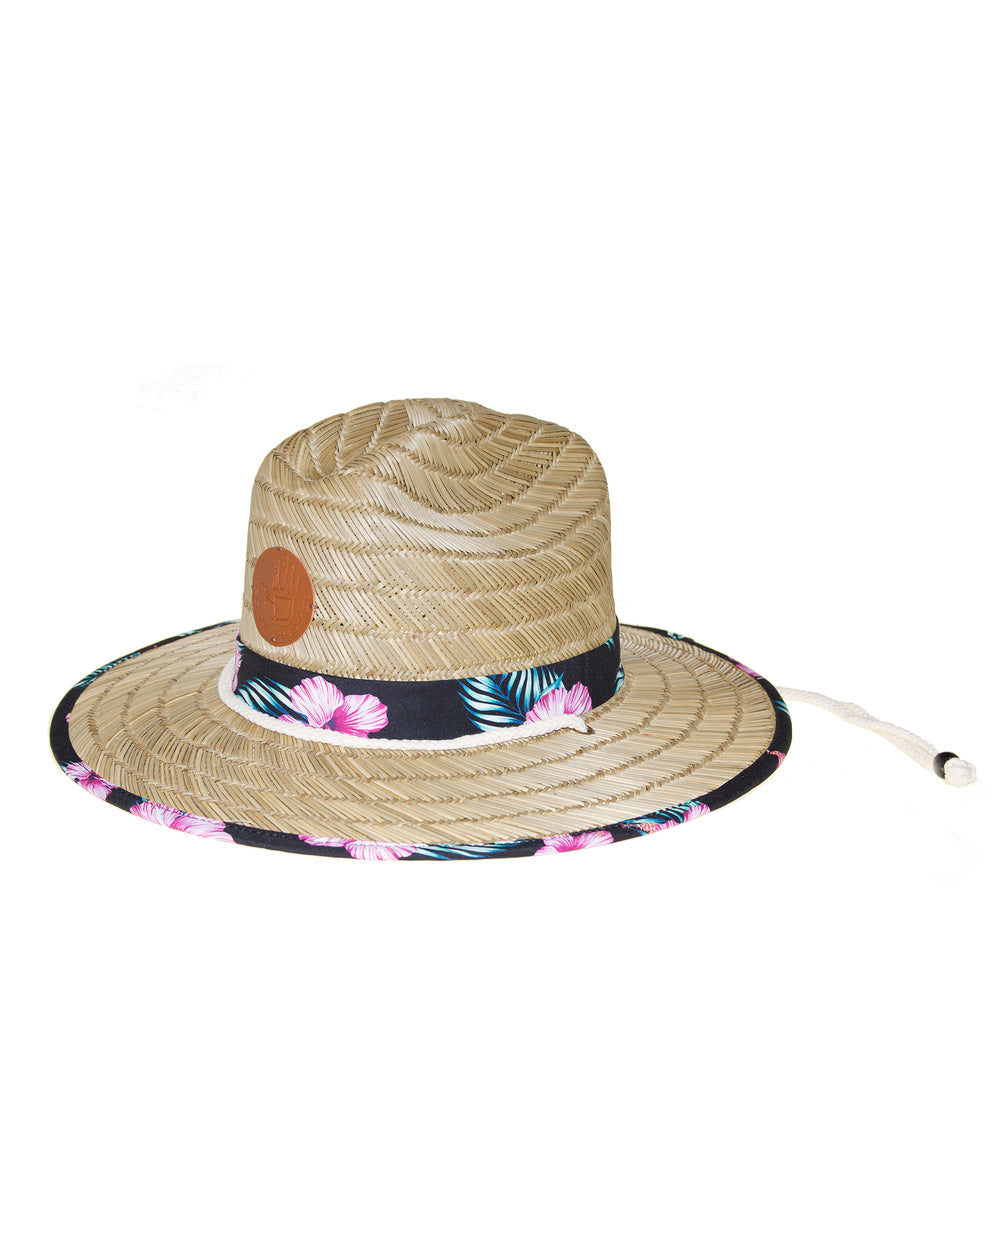 Straw Lifeguard Hat with Print Trim - Natural/Print